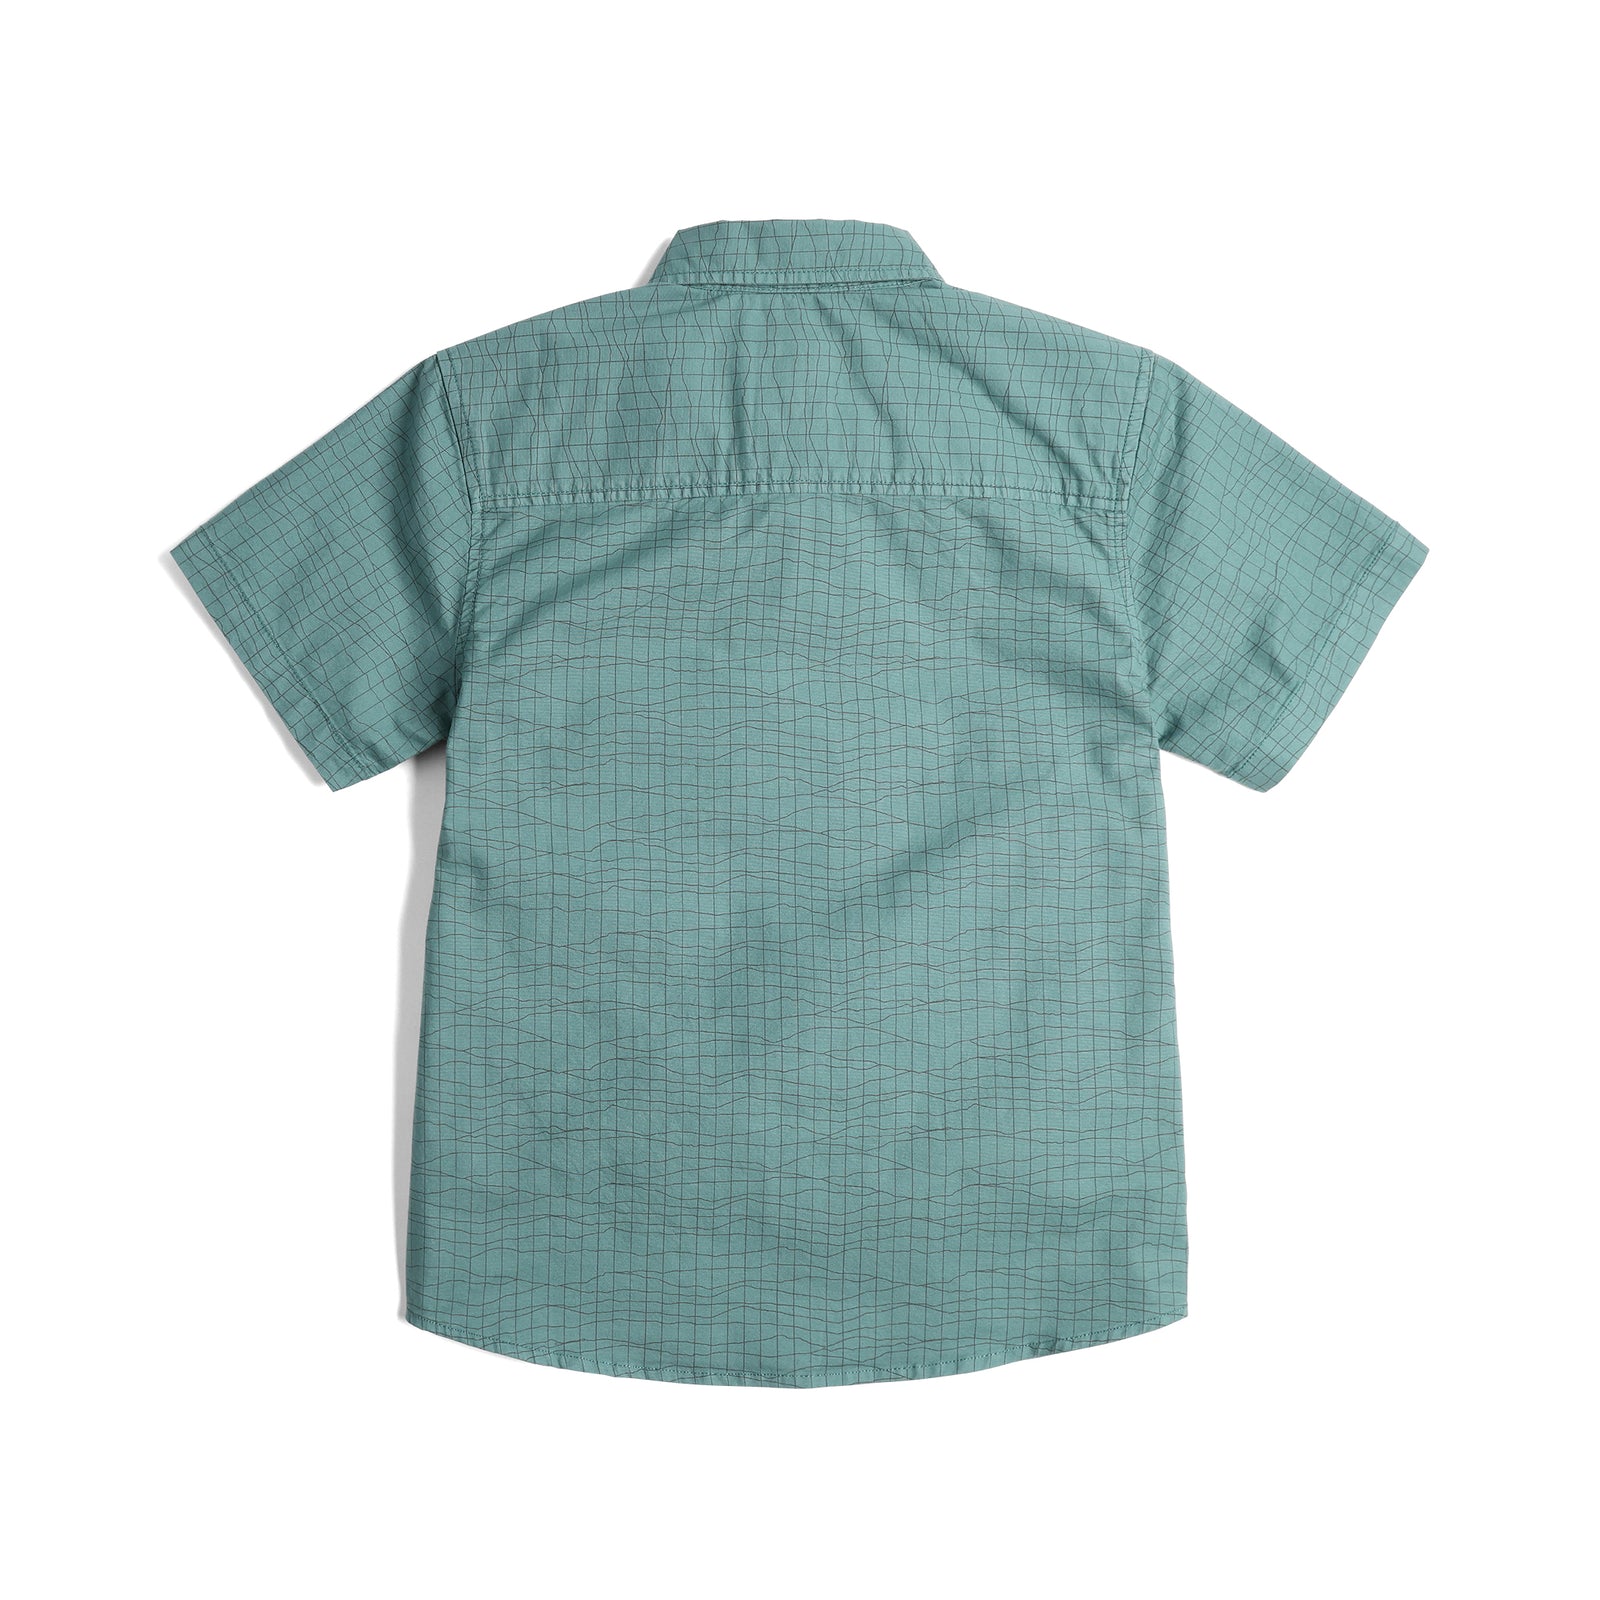 Back View of Topo Designs Dirt Desert Shirt Ss - Women's in "Sea Pine Terrain"